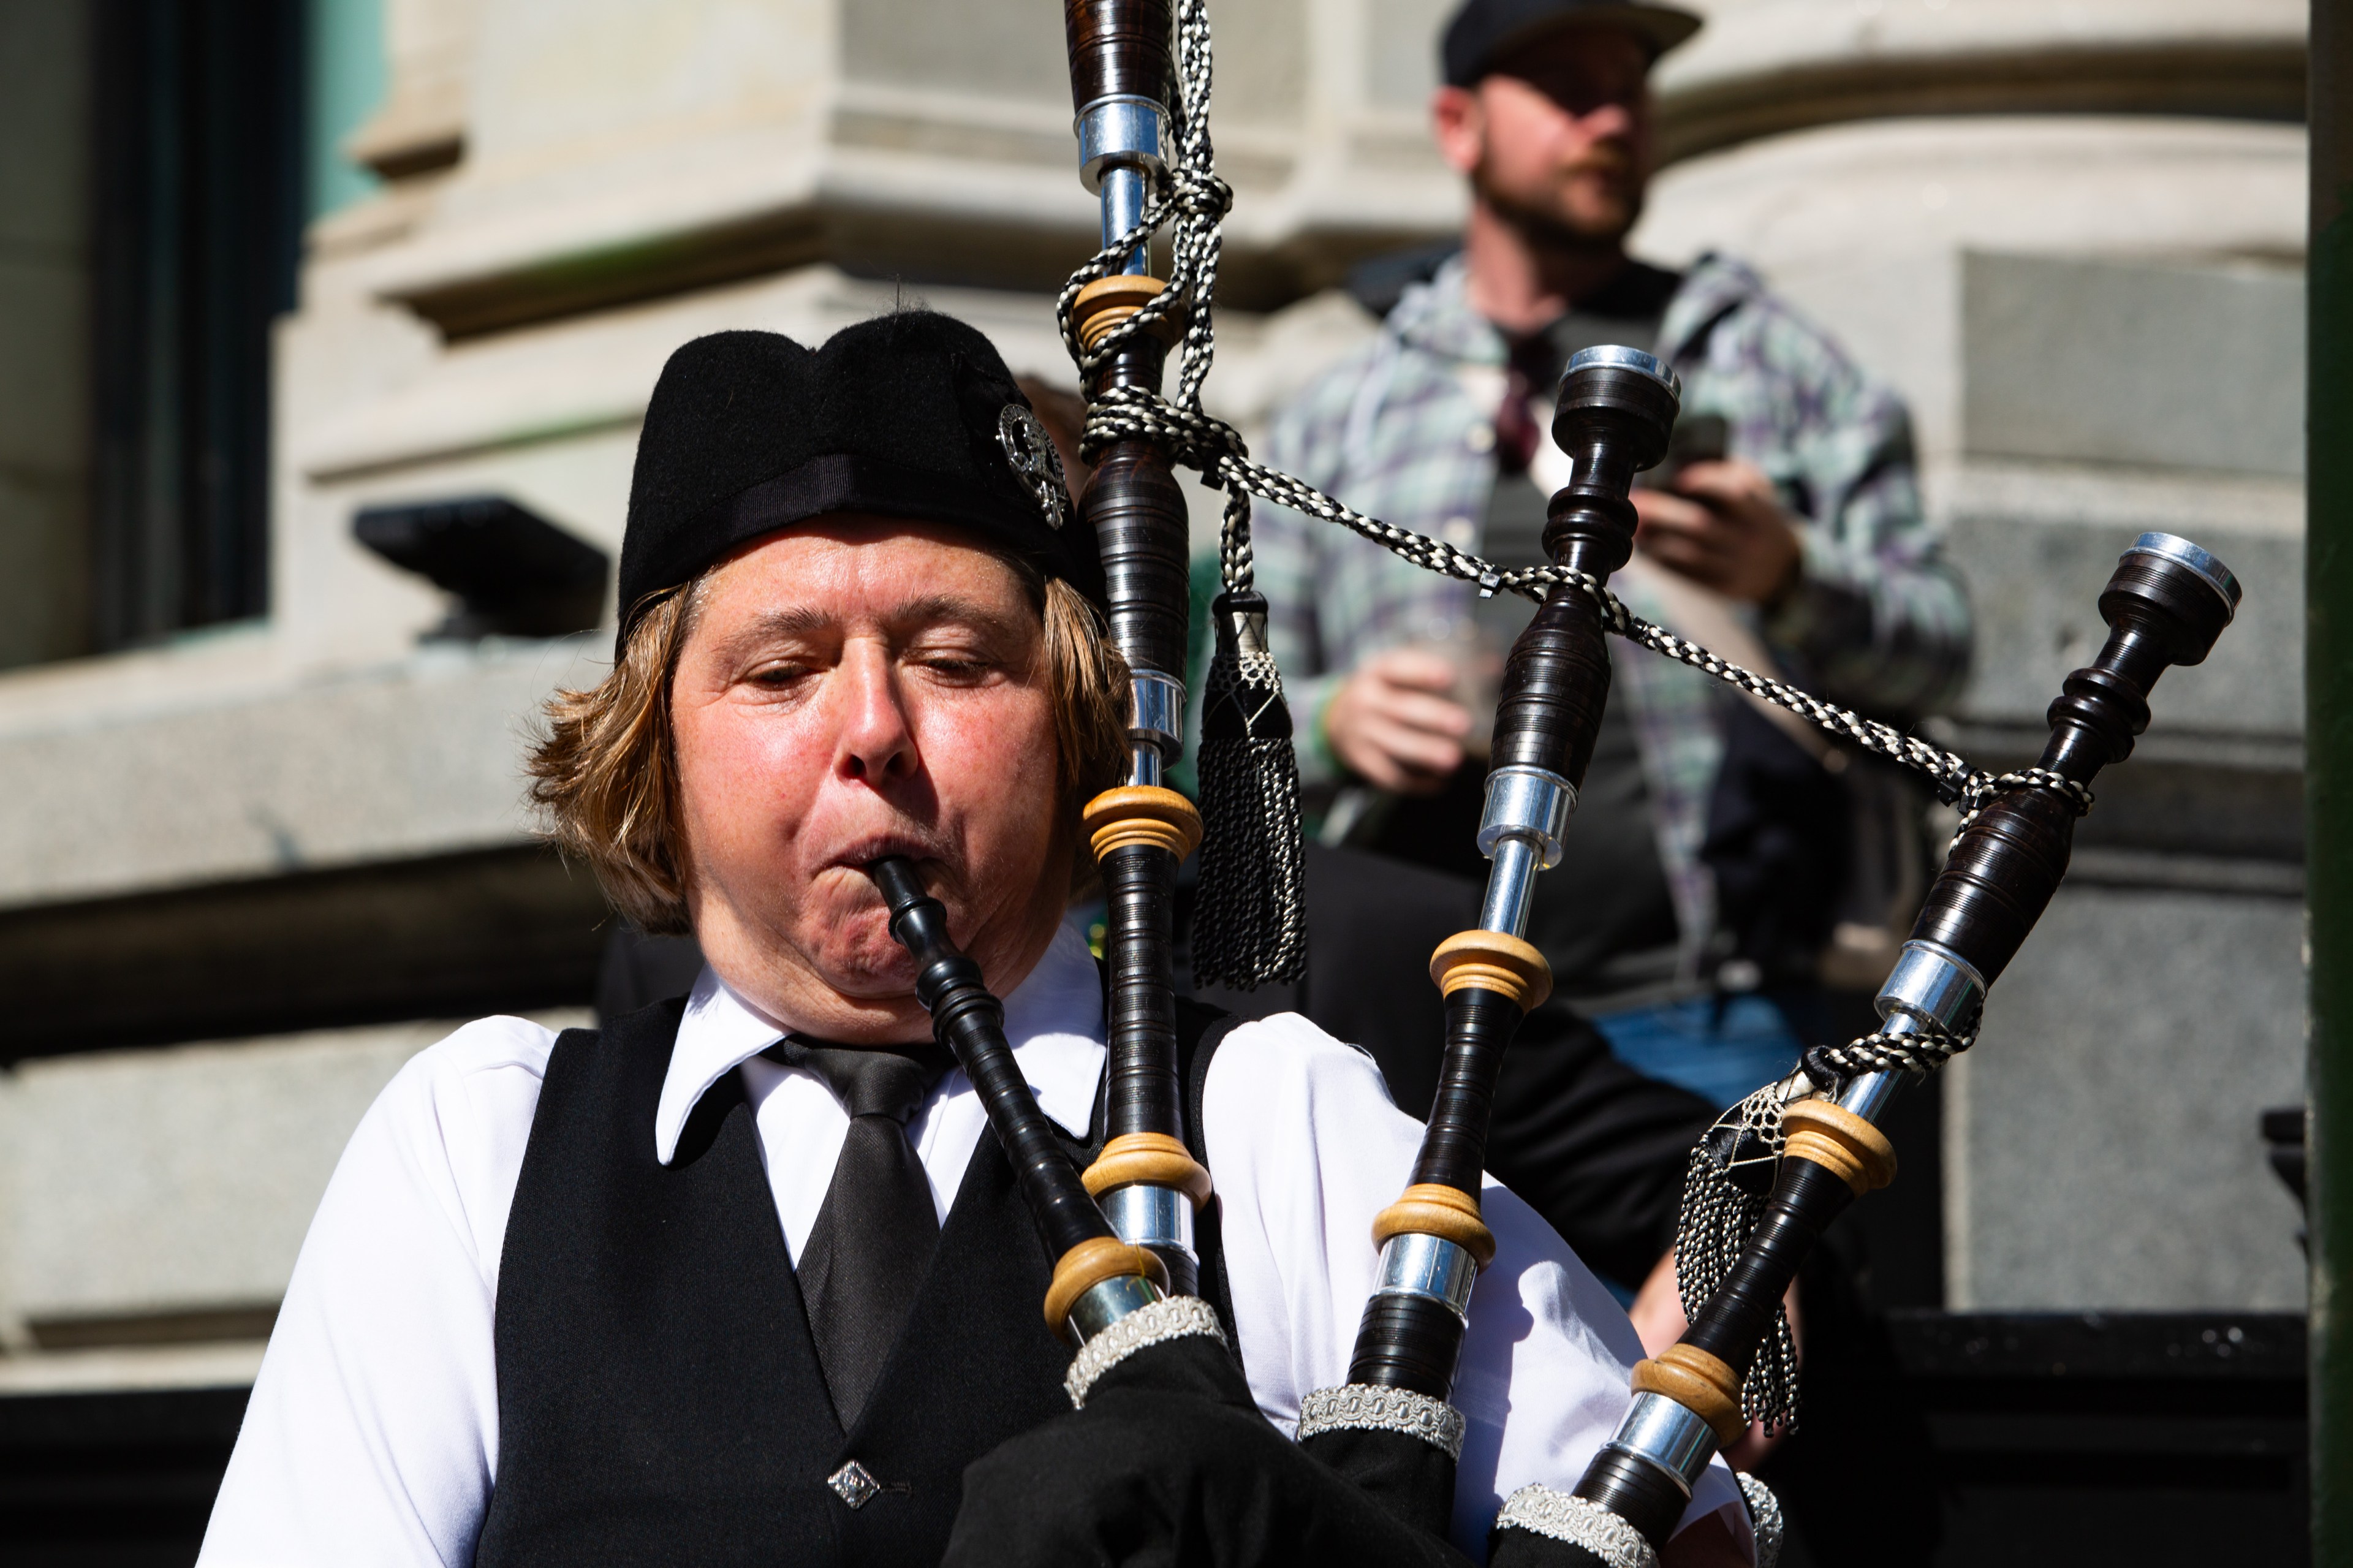 A bagpipe player at San Francisco's St. Patrick's Day parade